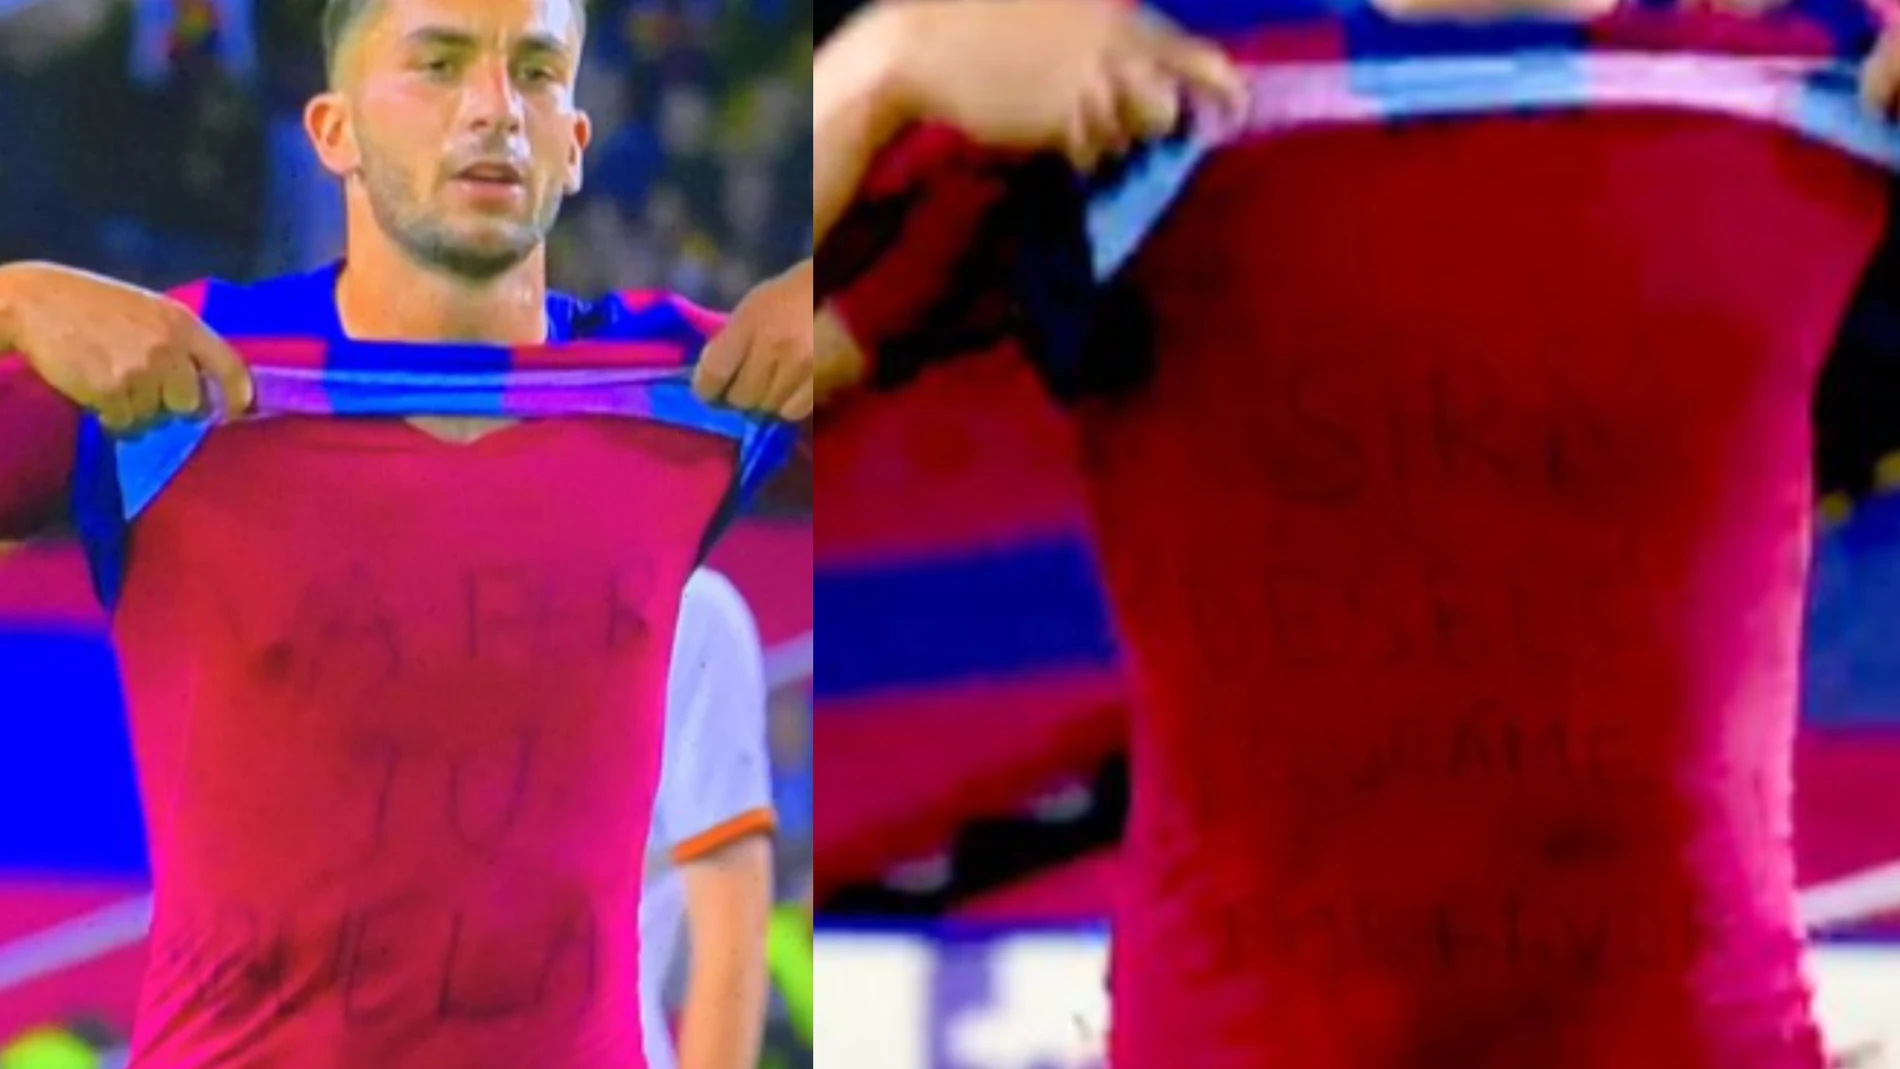 El mensaje real de Ferrán Torres junto a la imagen "fake"